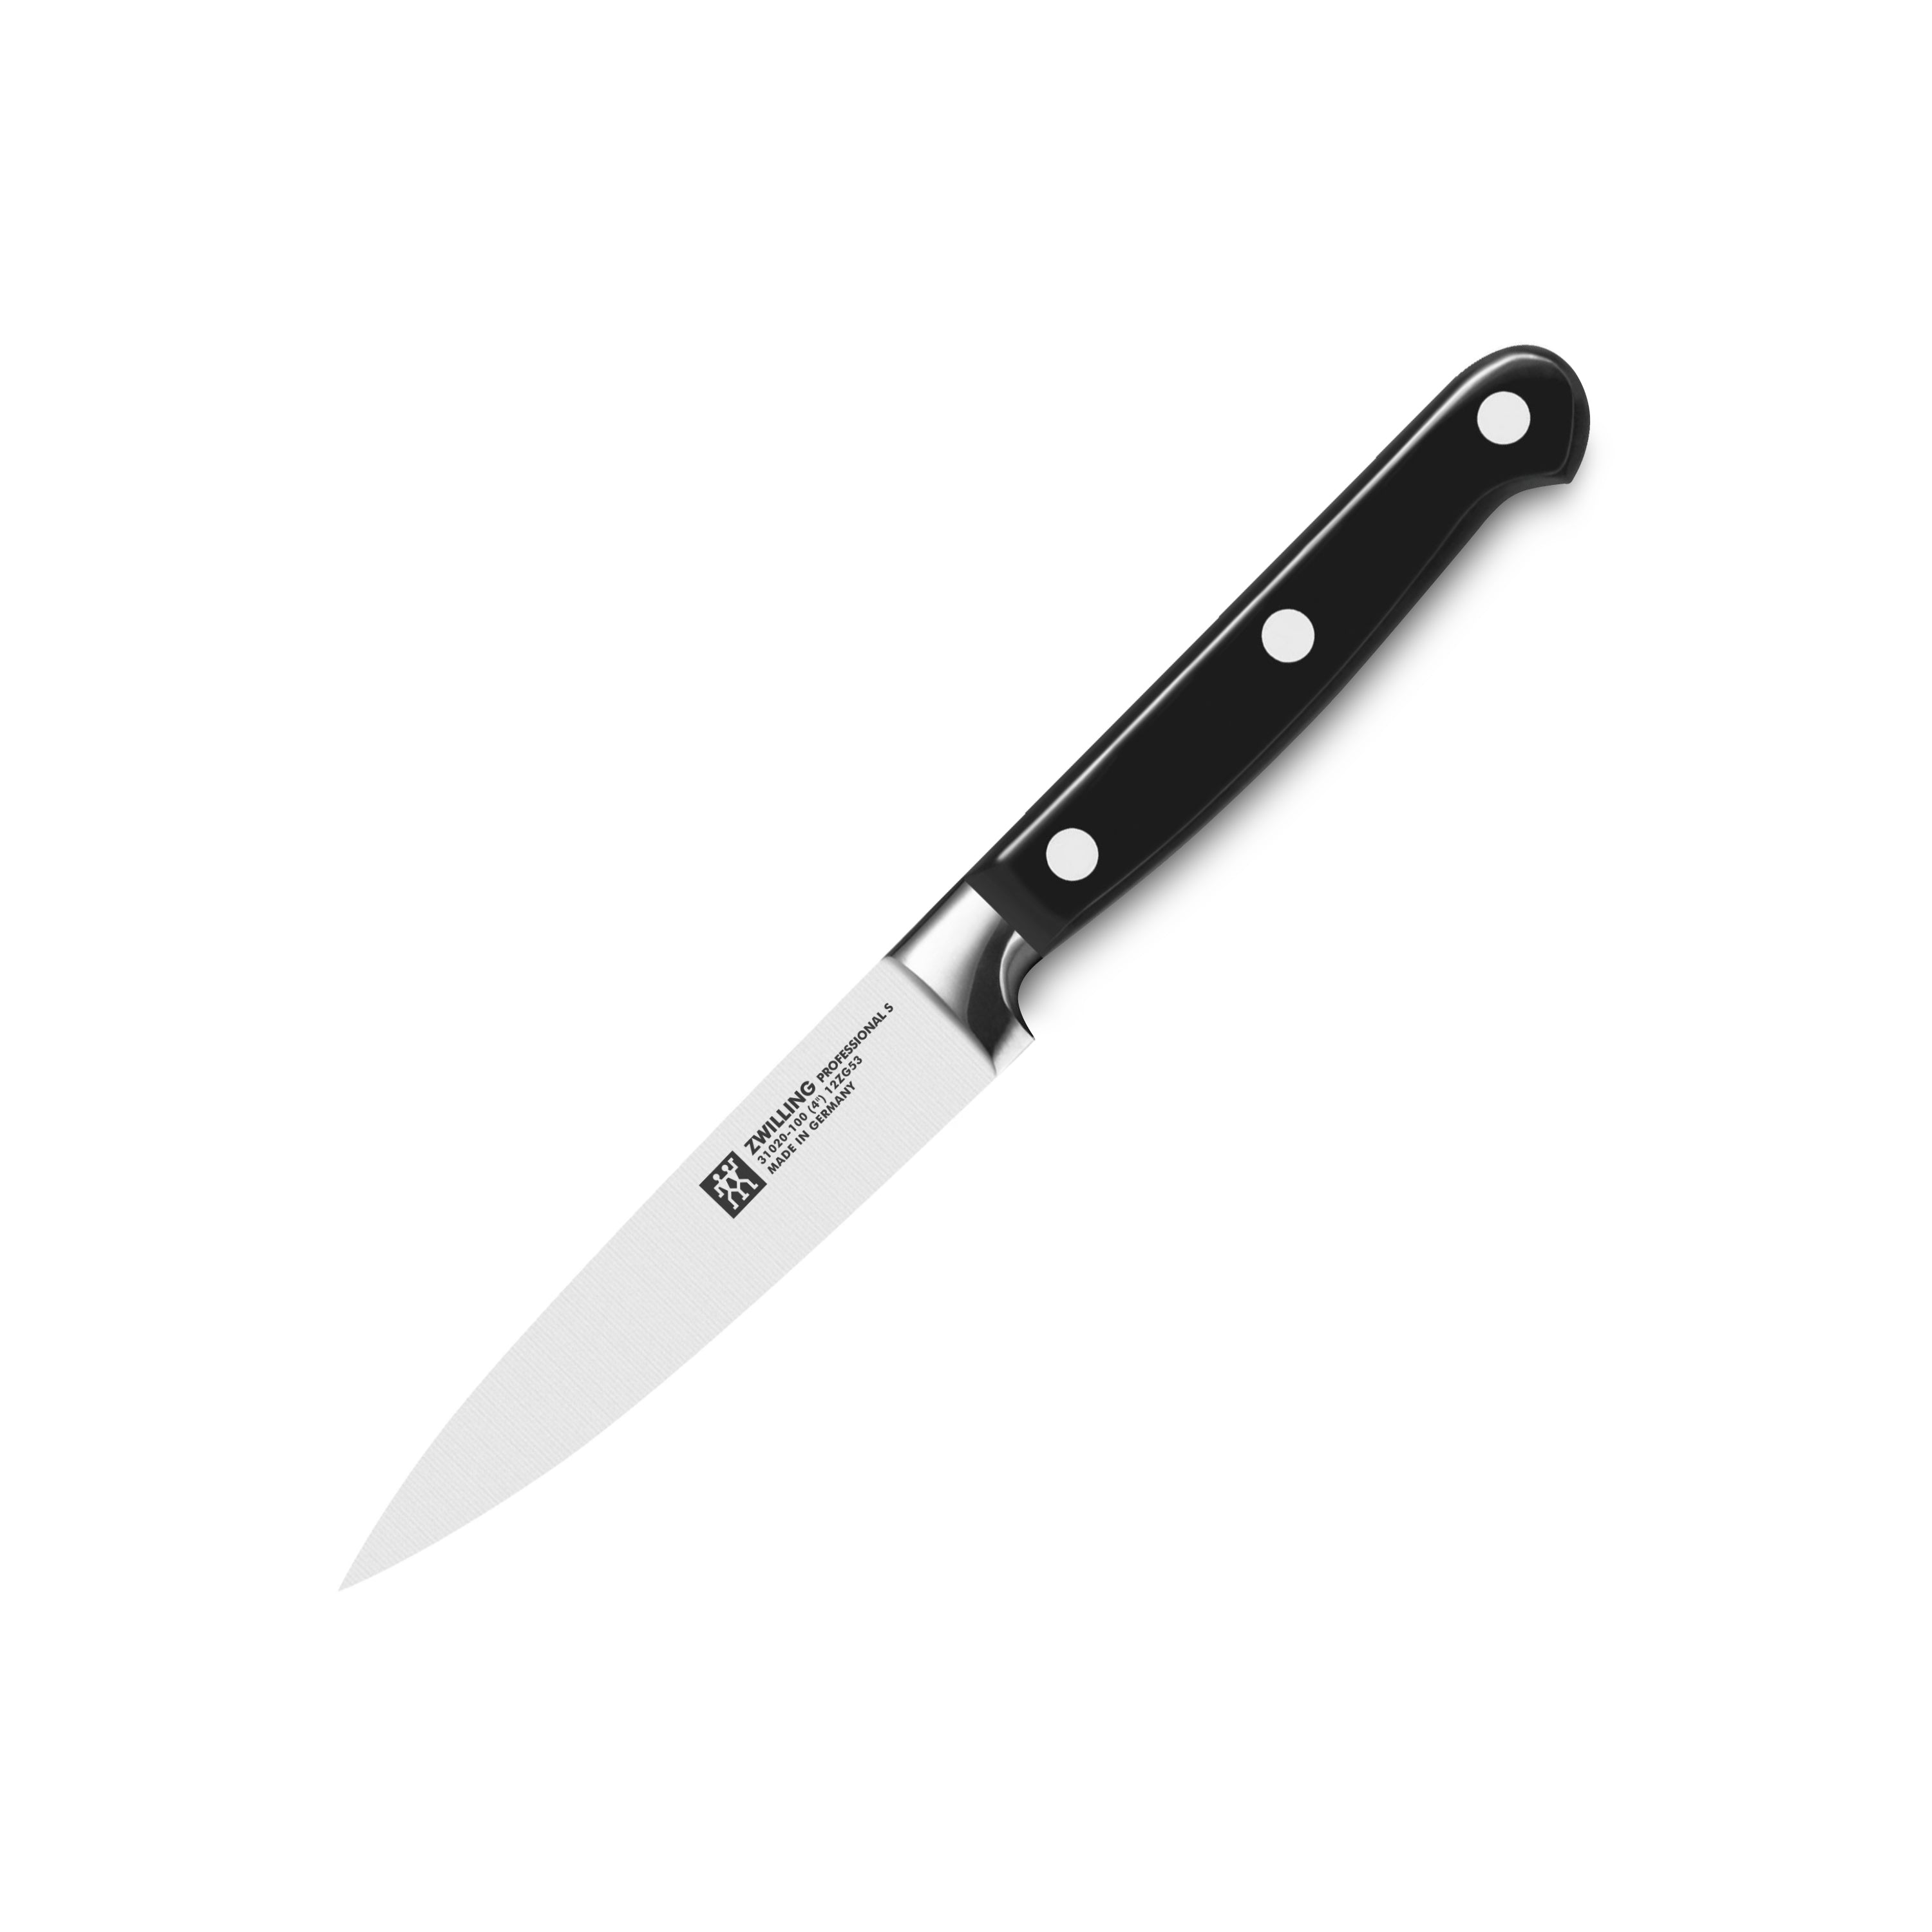 Zwilling Henckels 4-Stage Knife Sharpener In-depth Review: Good